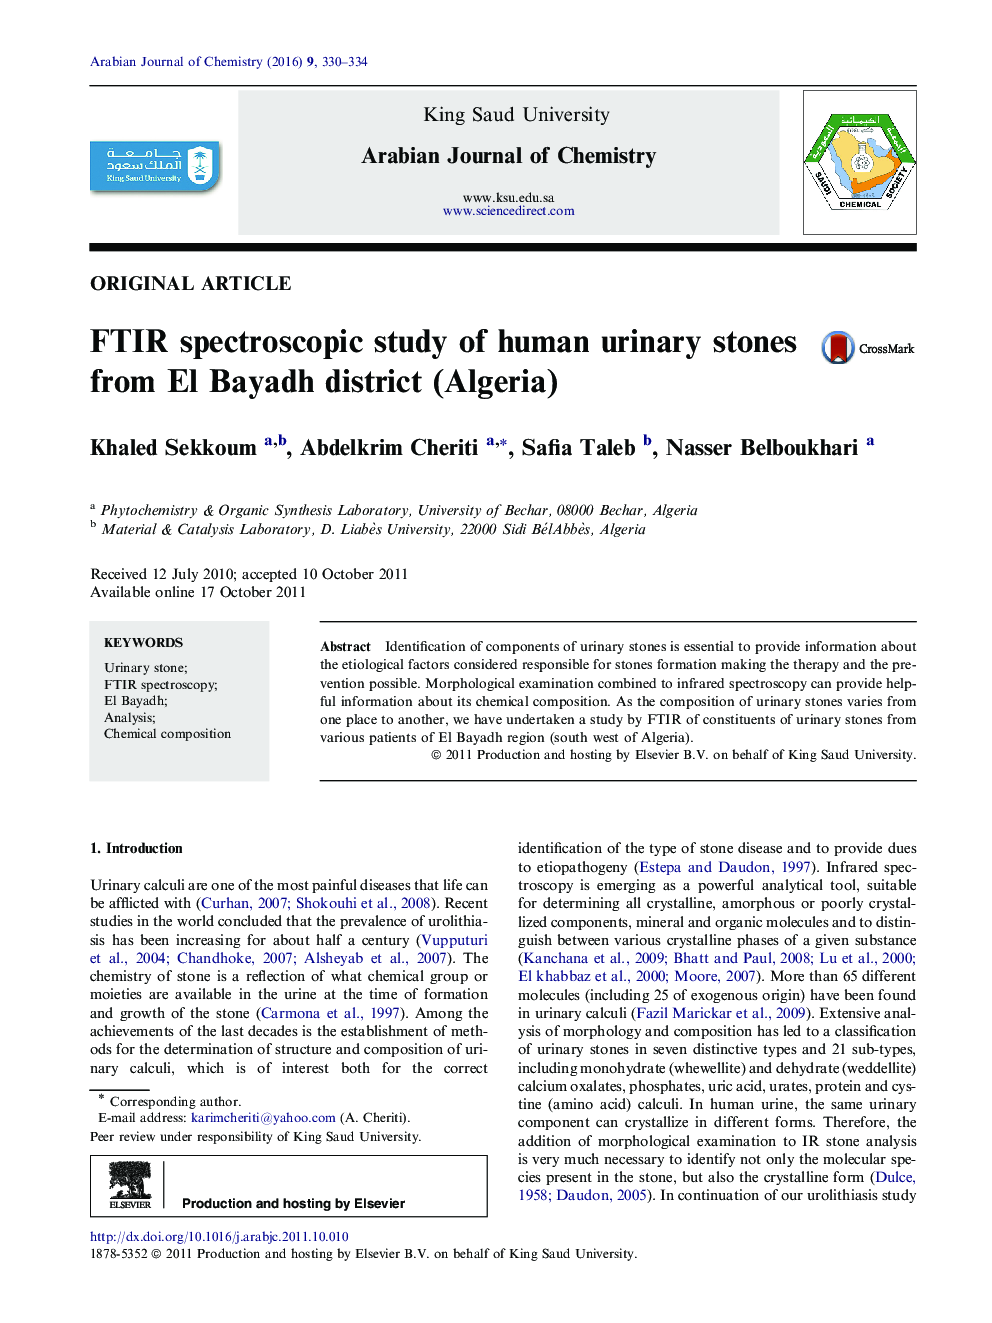 FTIR spectroscopic study of human urinary stones from El Bayadh district (Algeria) 